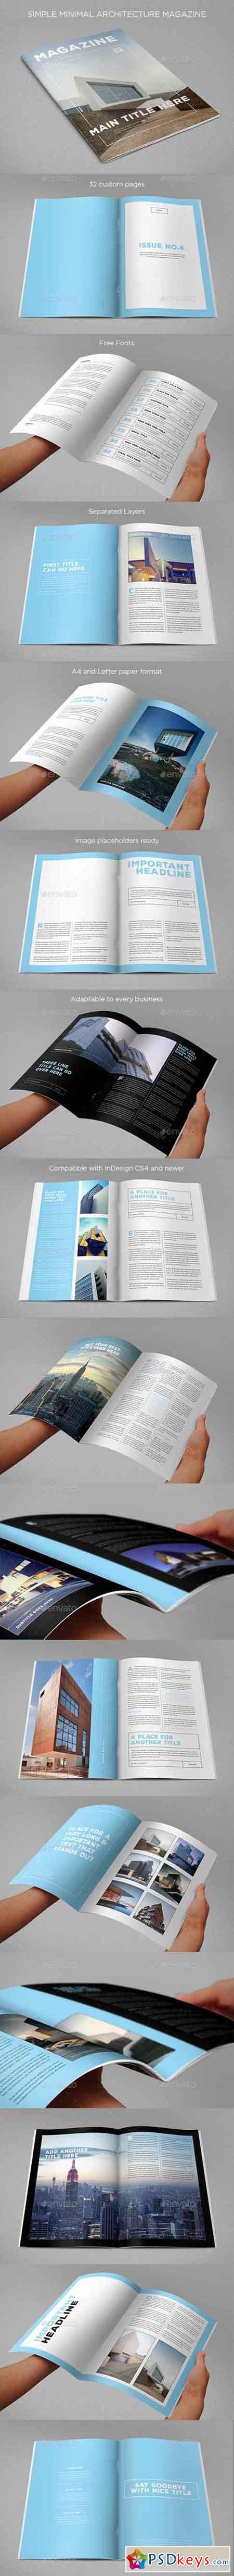 Simple Minimal Architecture Magazine 14459946